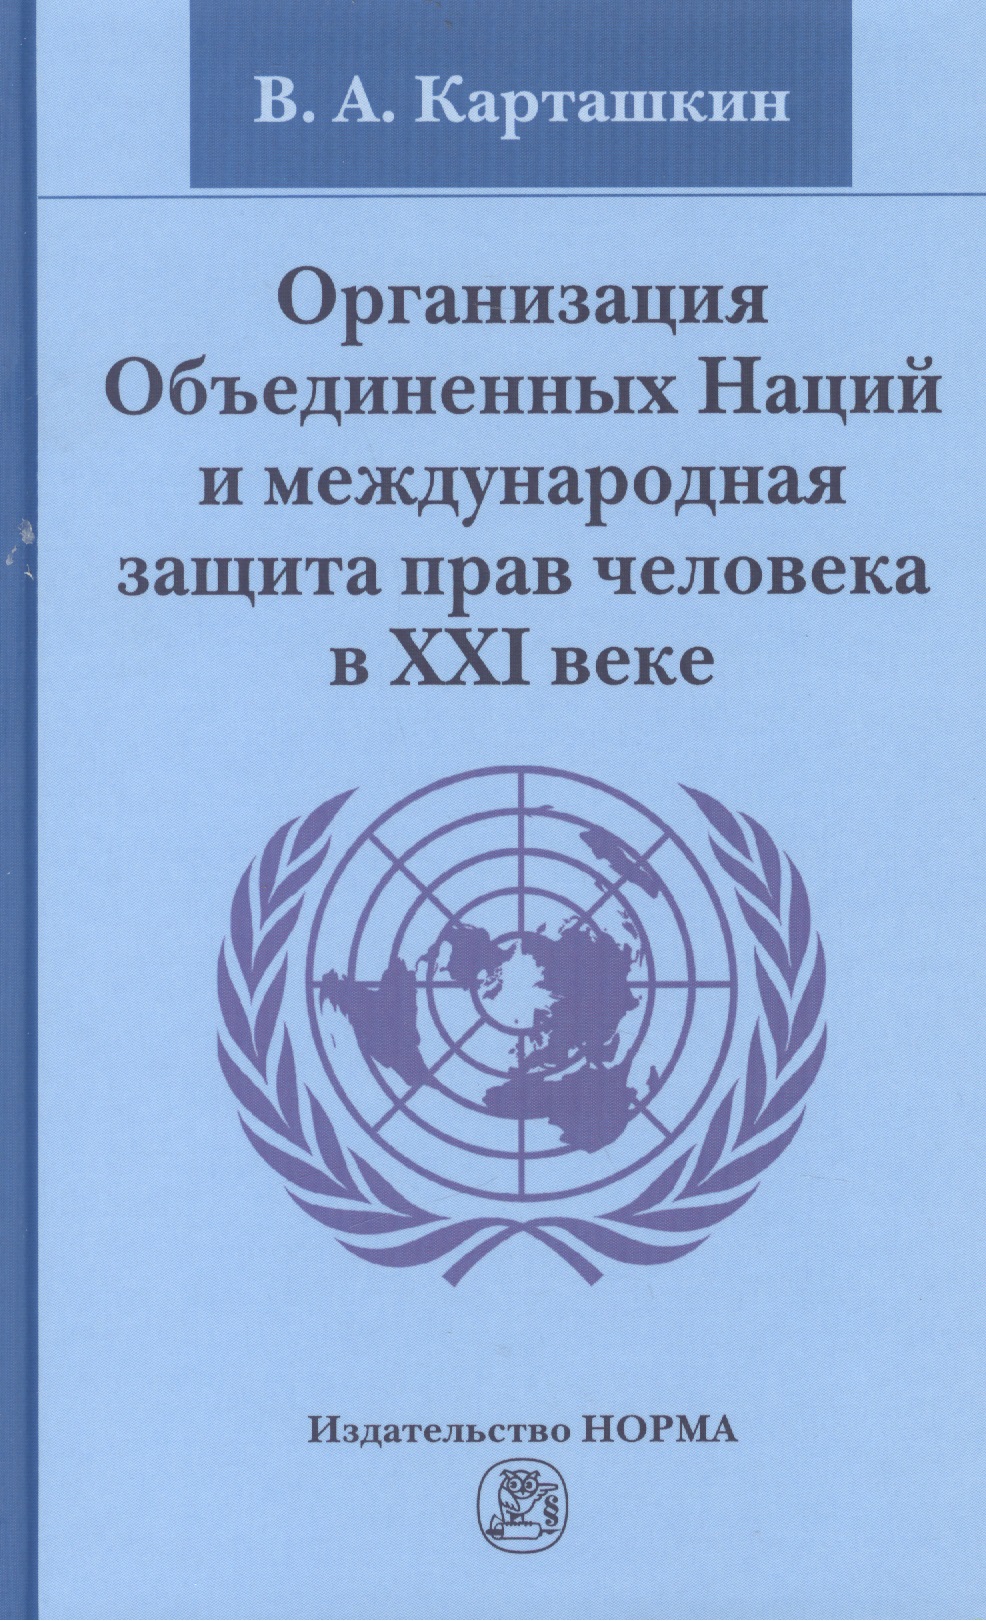 Законодательство оон. Книга ООН. Организация Объединённых наций. ООН защита прав человека. Организация ООН книга.